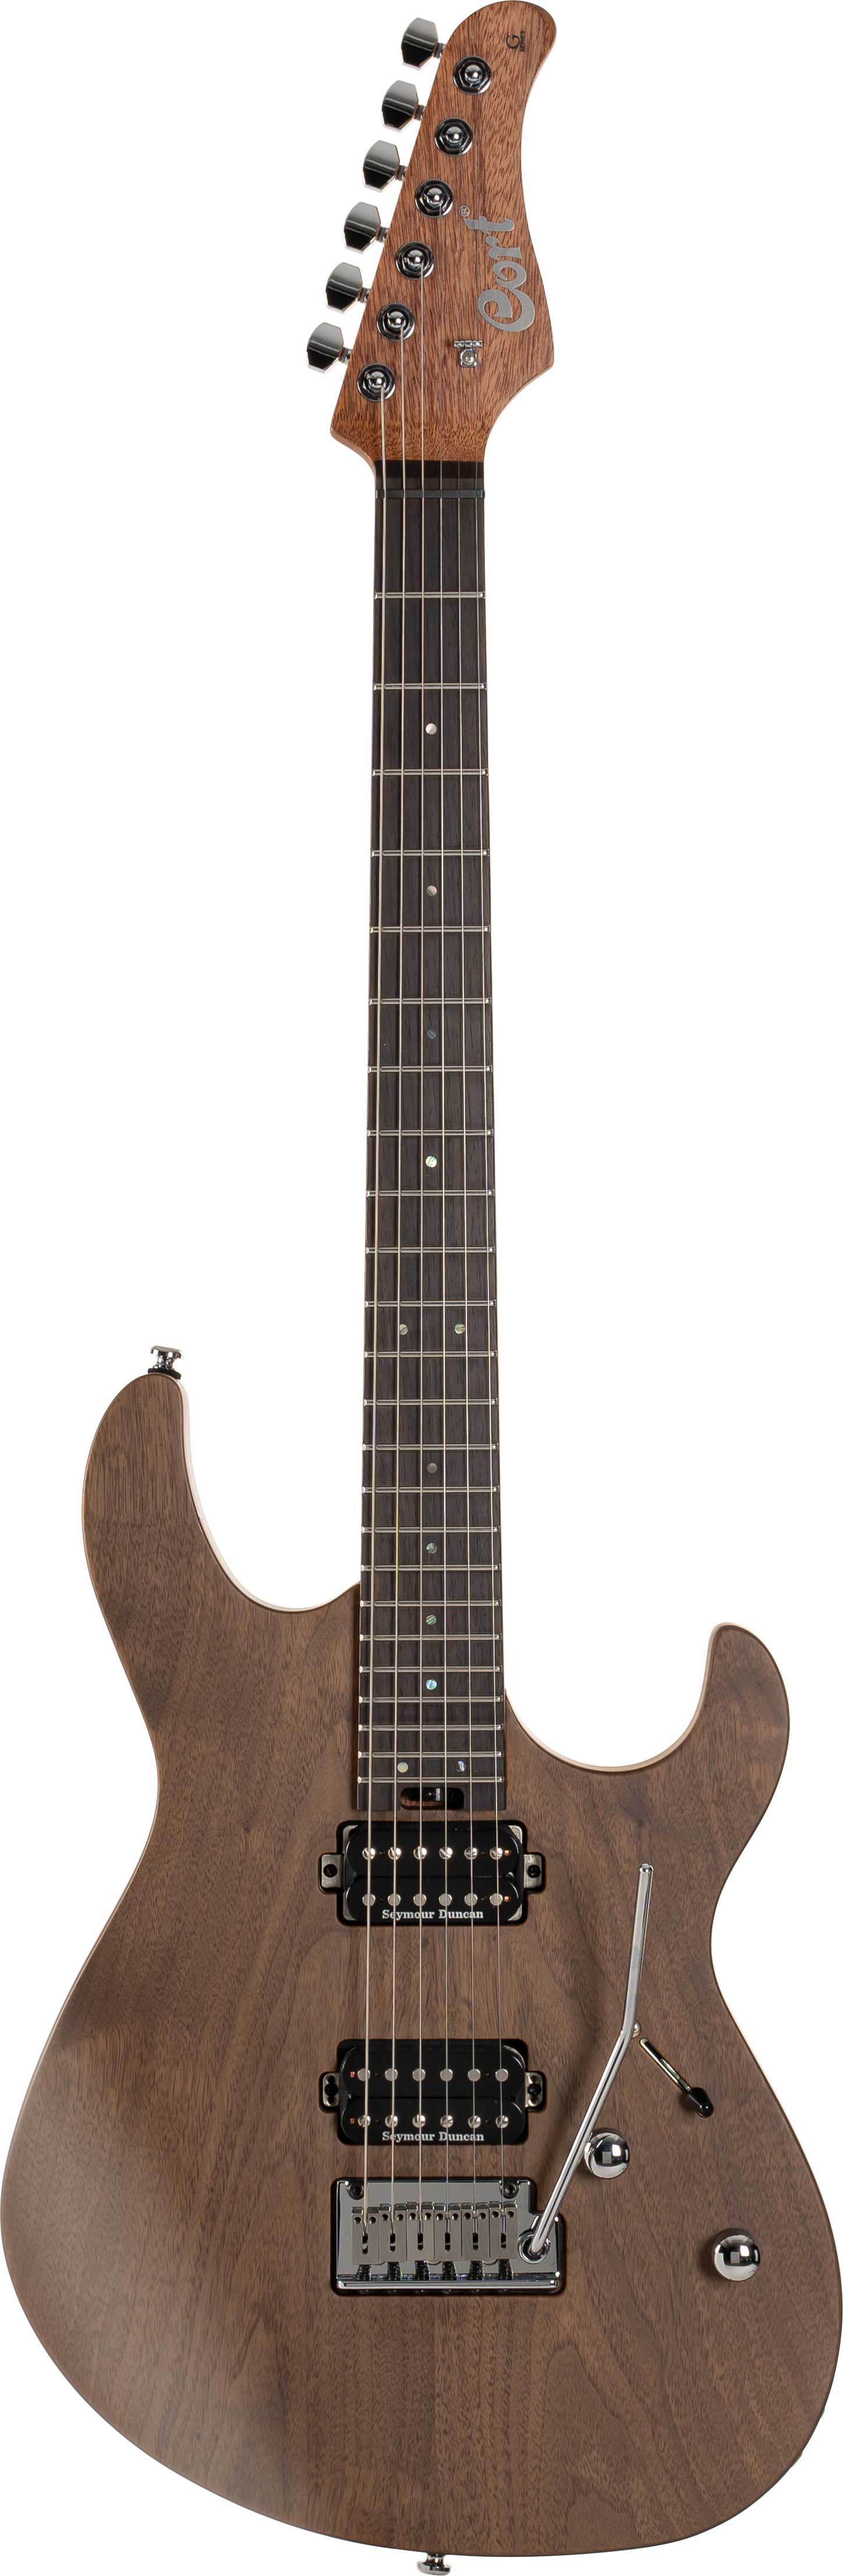 Cort G300 Raw Electric Guitar with Bag - Natural Satin